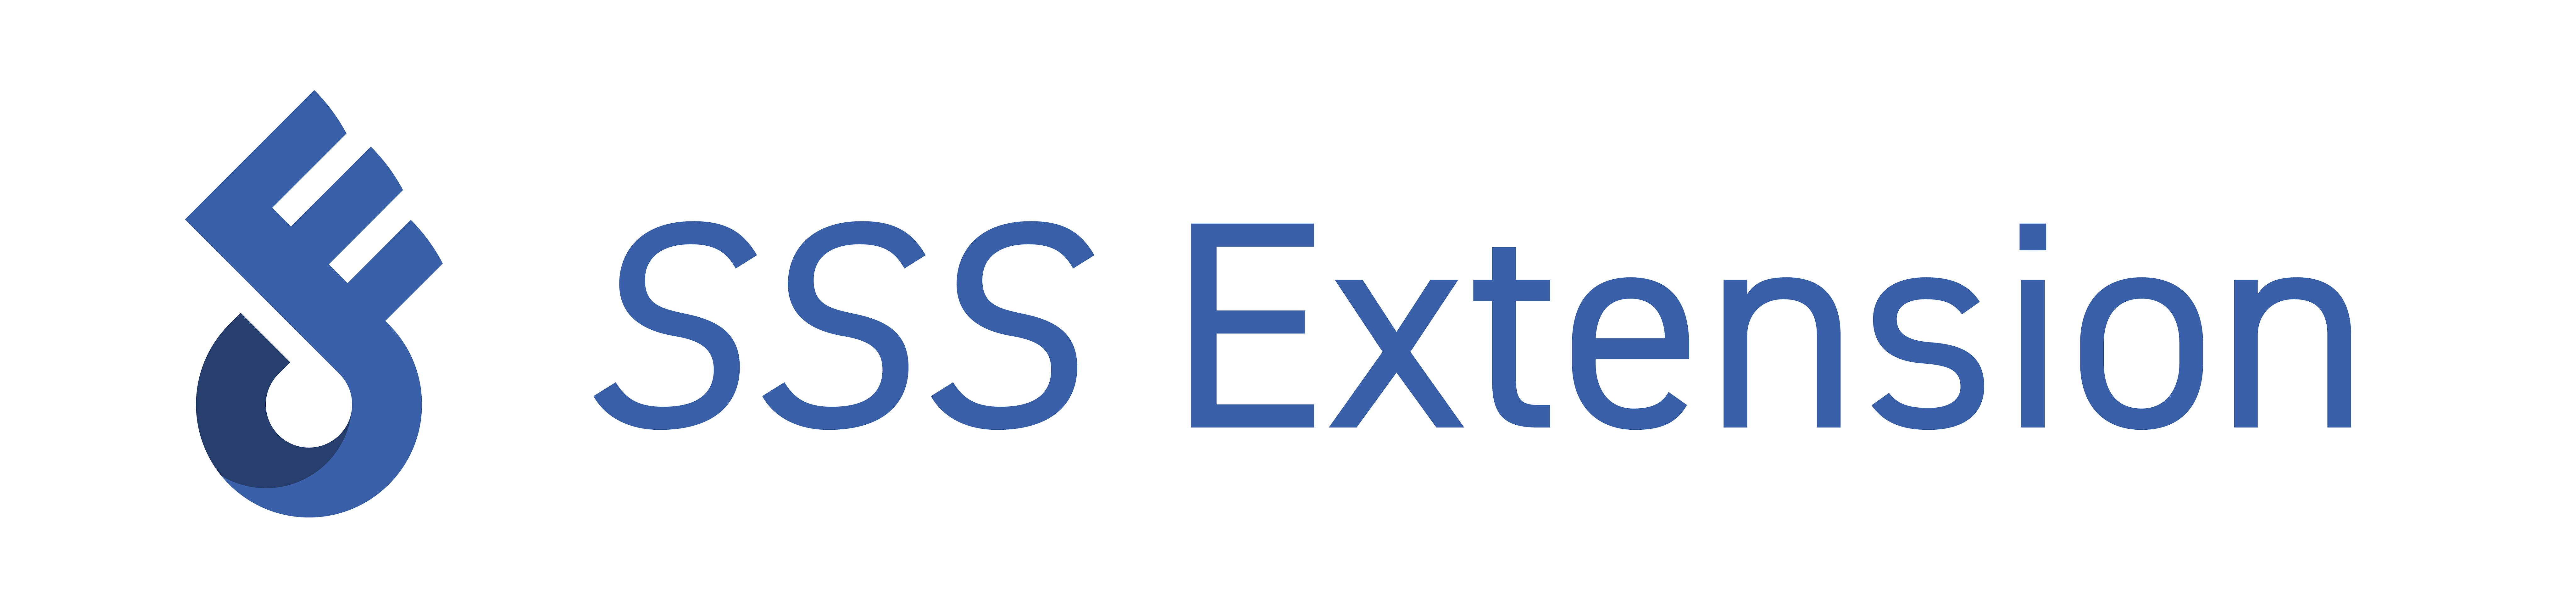 SSS-Extension_white_logo_typeMark.png